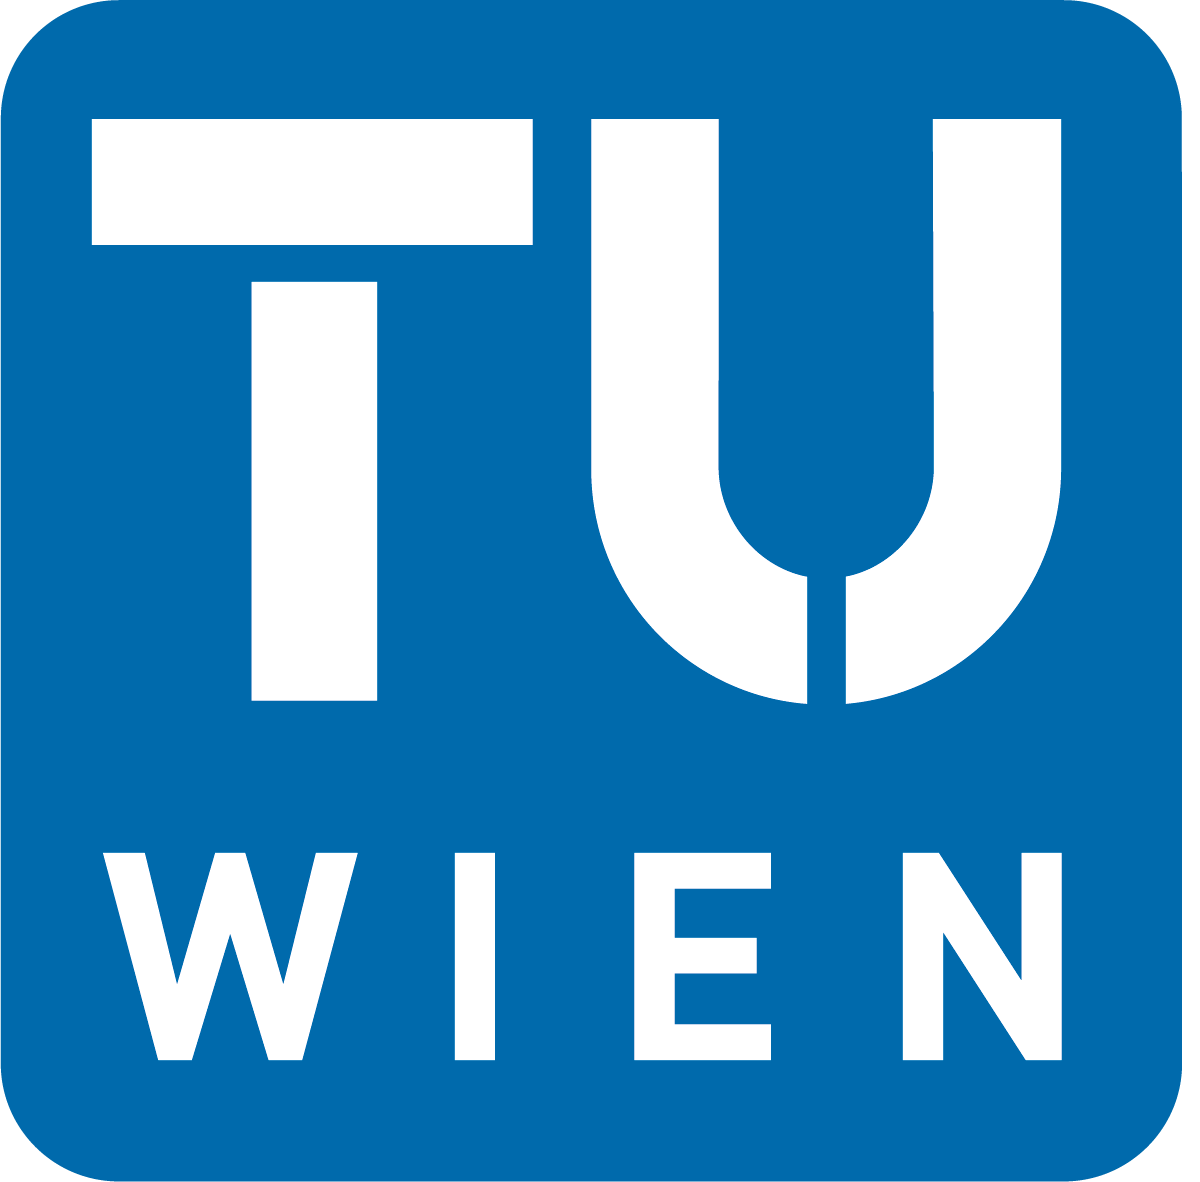 Logos der Partner:innen (TU Wien)